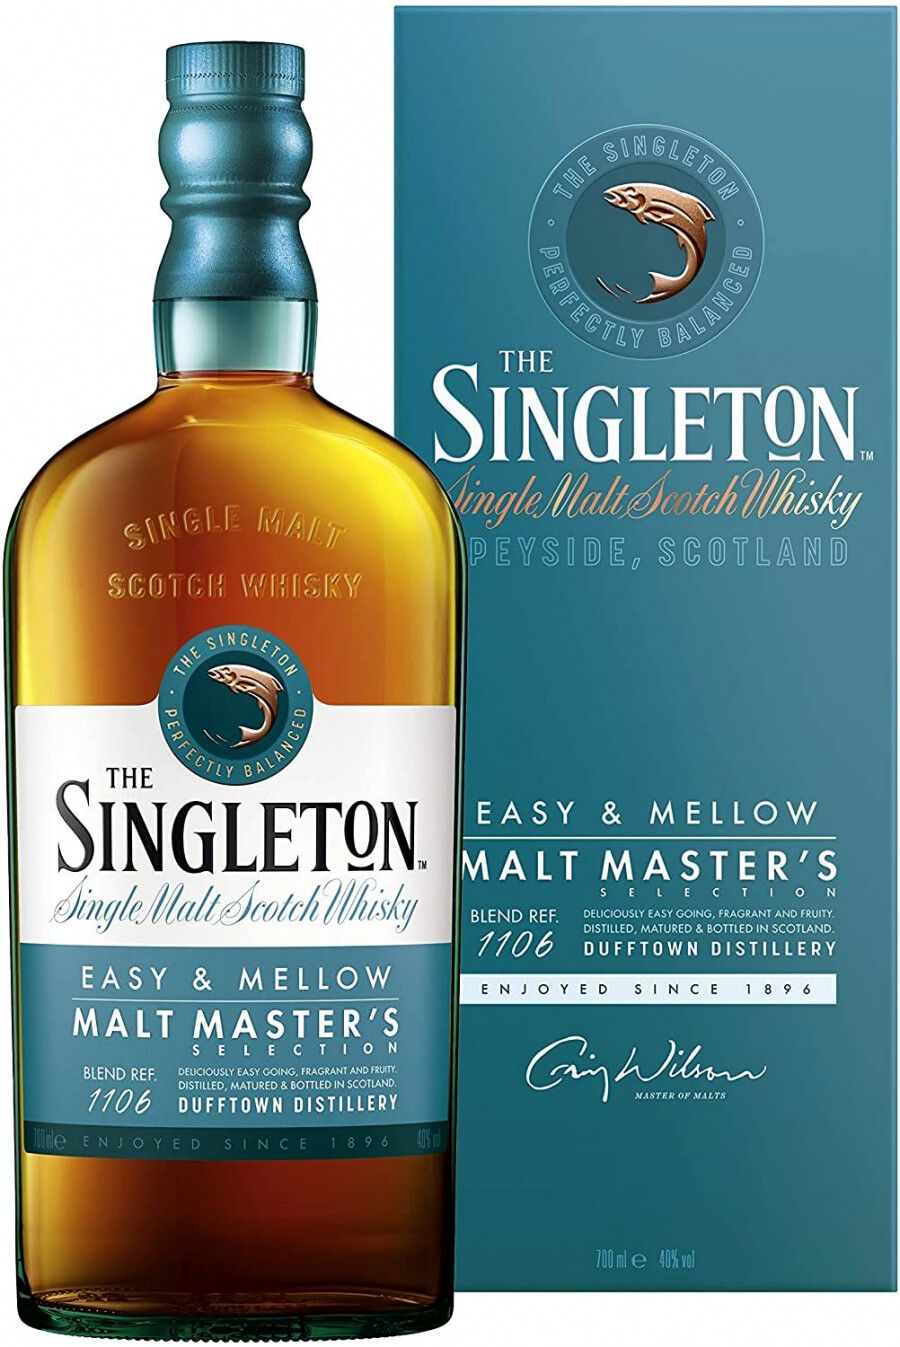 The Singleton Of Dufftown Malt Master's photo 2